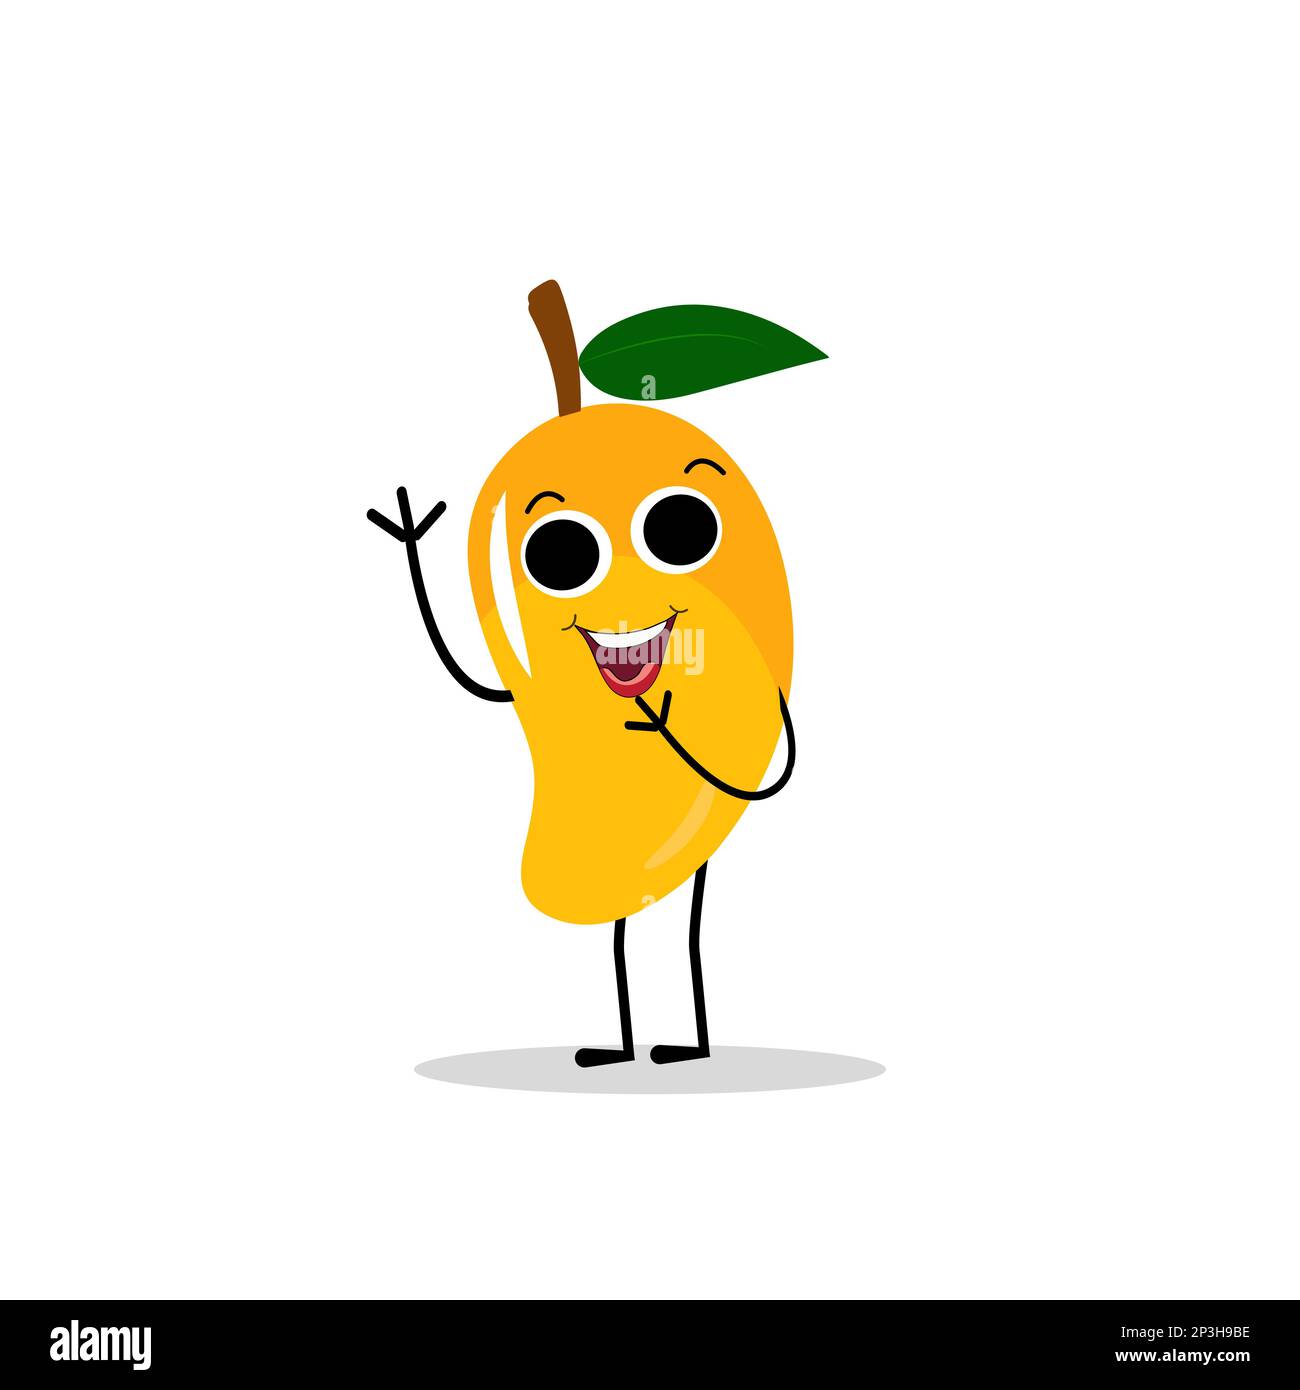 Mango character design. Kawaii mango characters vector illustration of